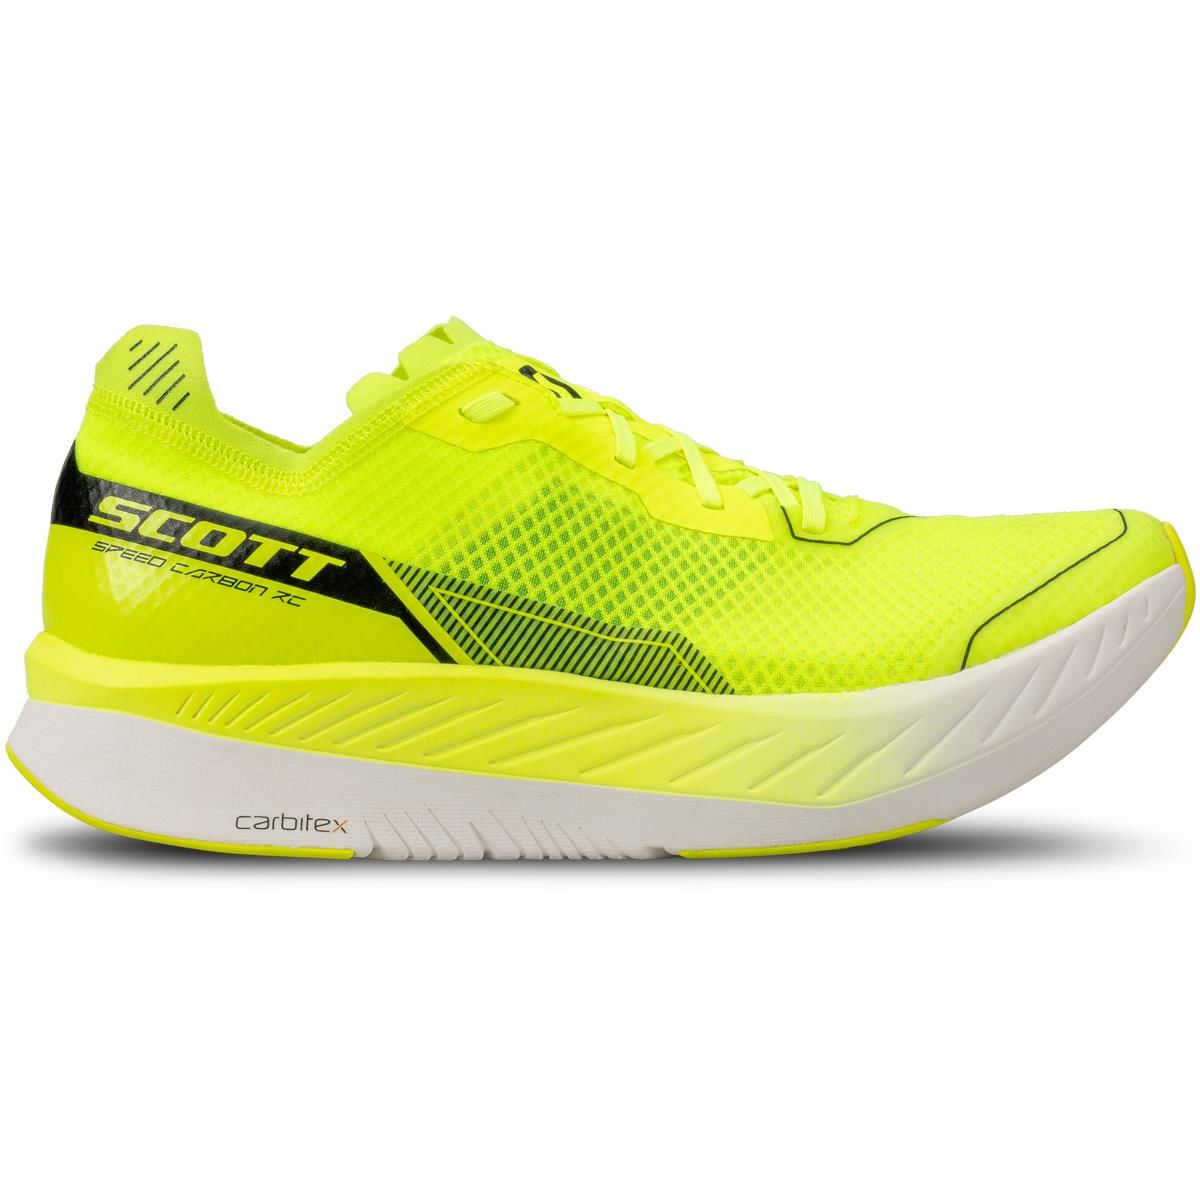 Scott Speed Carbon RC Kadın Koşu Ayakkabısı-SARI